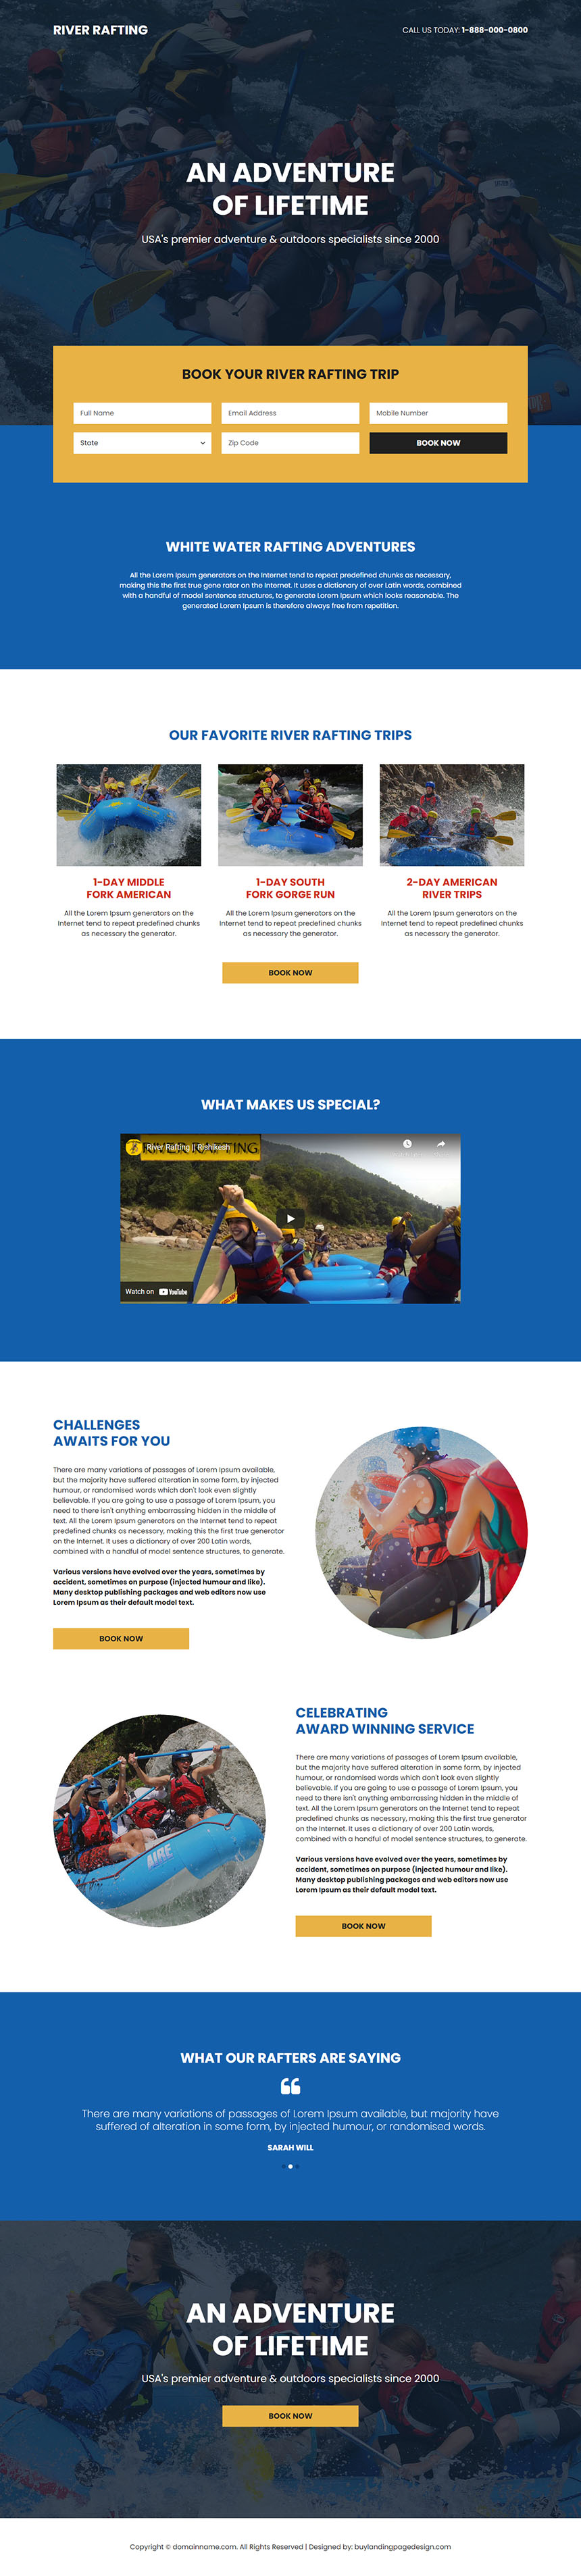 river rafting trips responsive landing page design